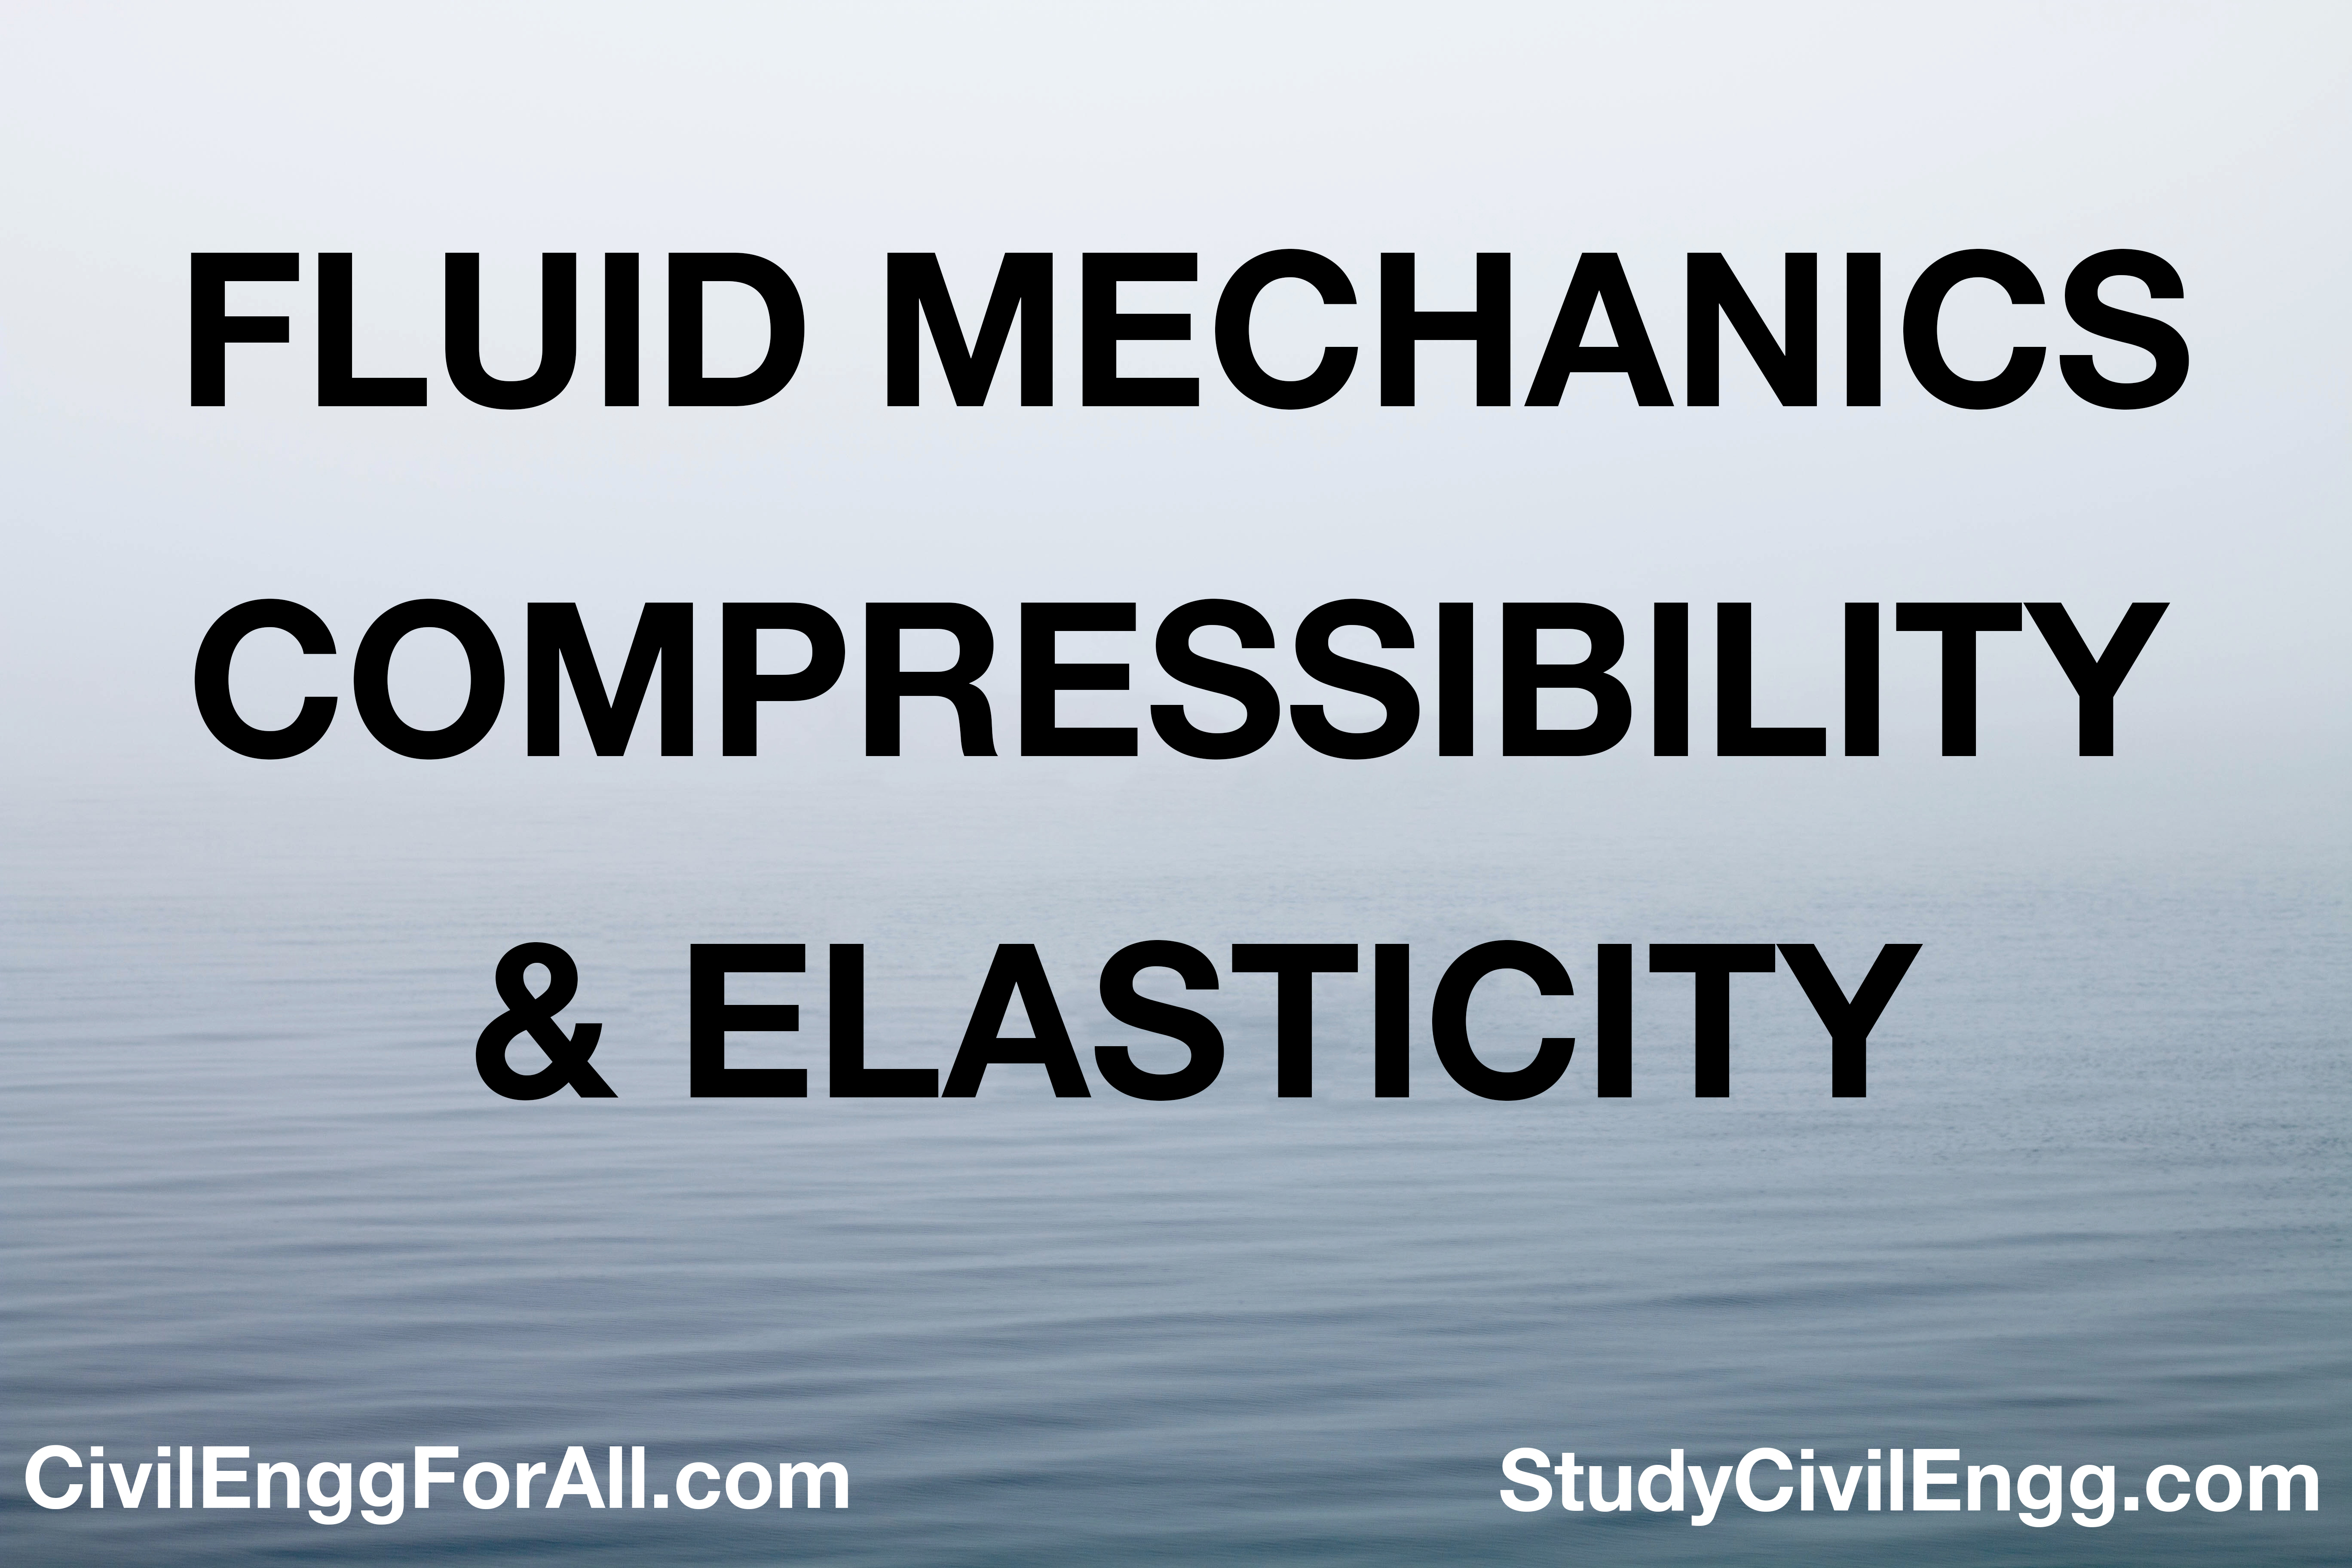 Compressibility & Elasticity - Fluid Mechanics - StudyCivilEngg.com